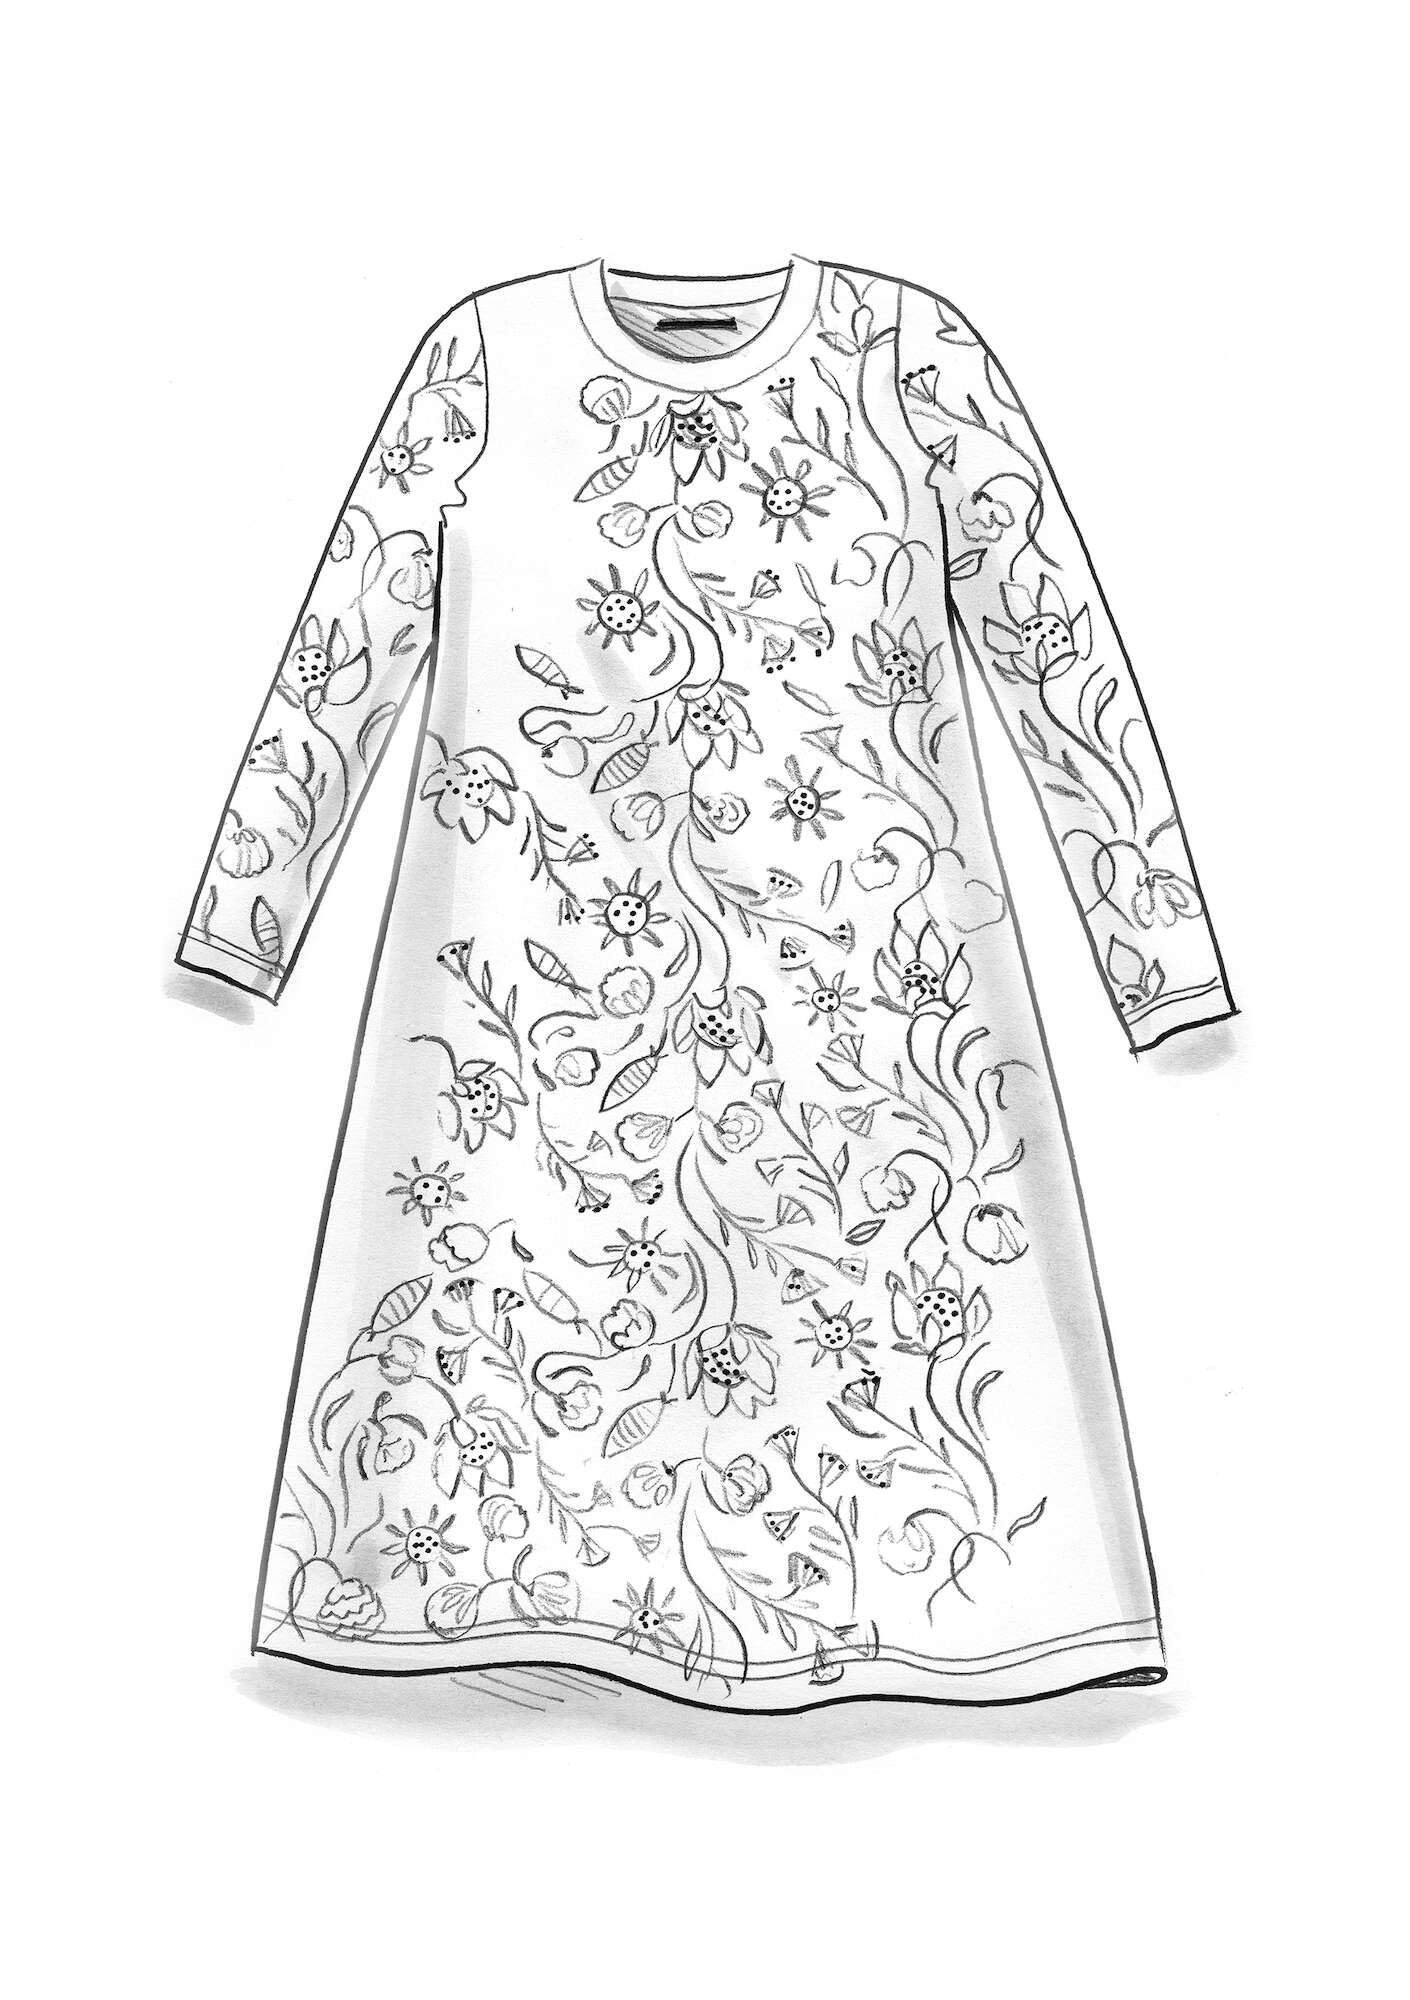 Tricot jurk  Protea  van lyocell/elastaan baksteen